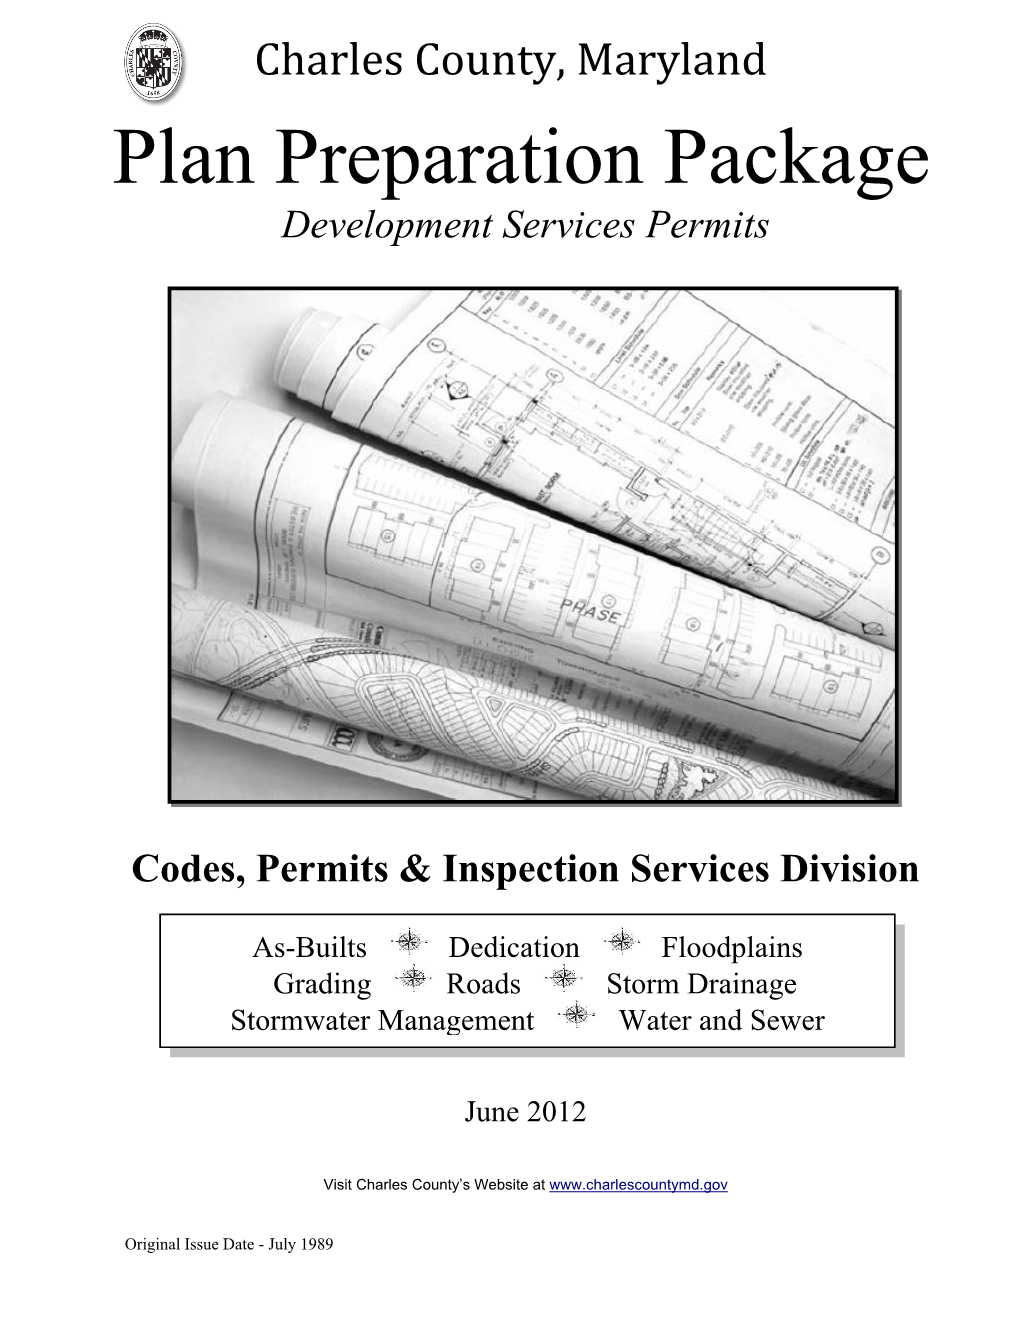 Plan Preparation Package Development Services Permits